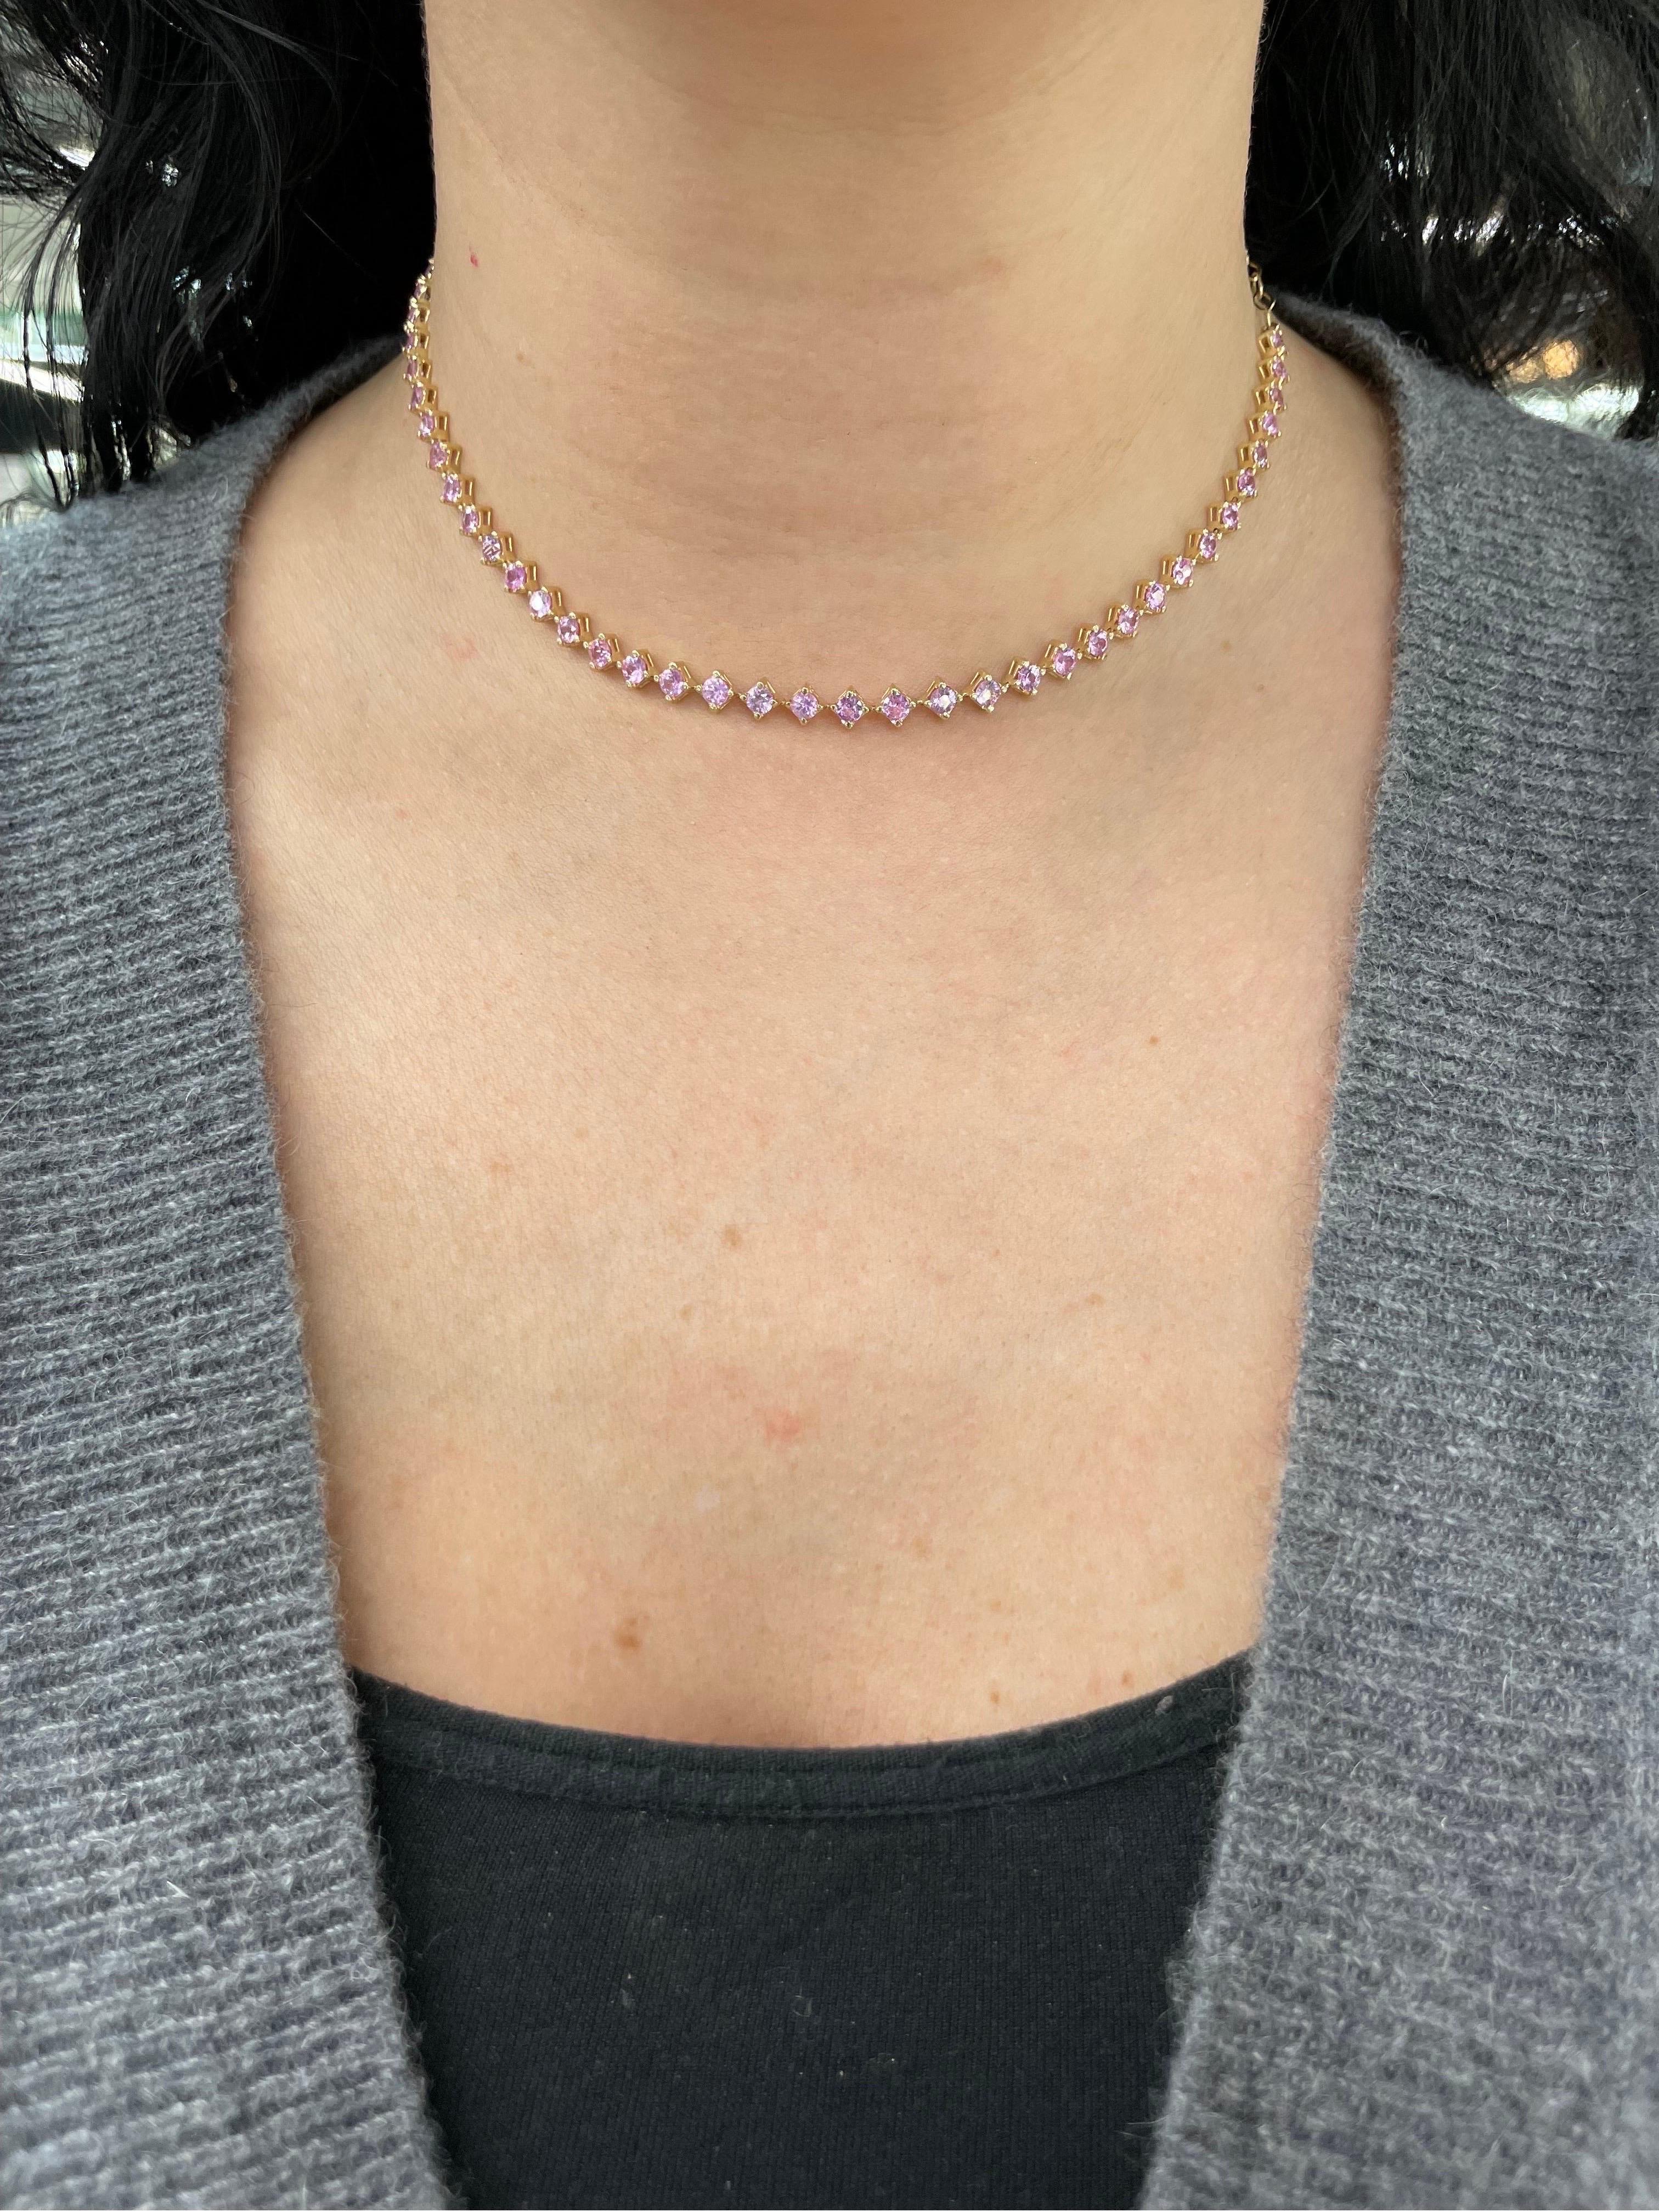 Round Cut Pink Sapphire Choker Necklace & Bracelet 5.61 Carats 14k Yellow Gold Adjustable